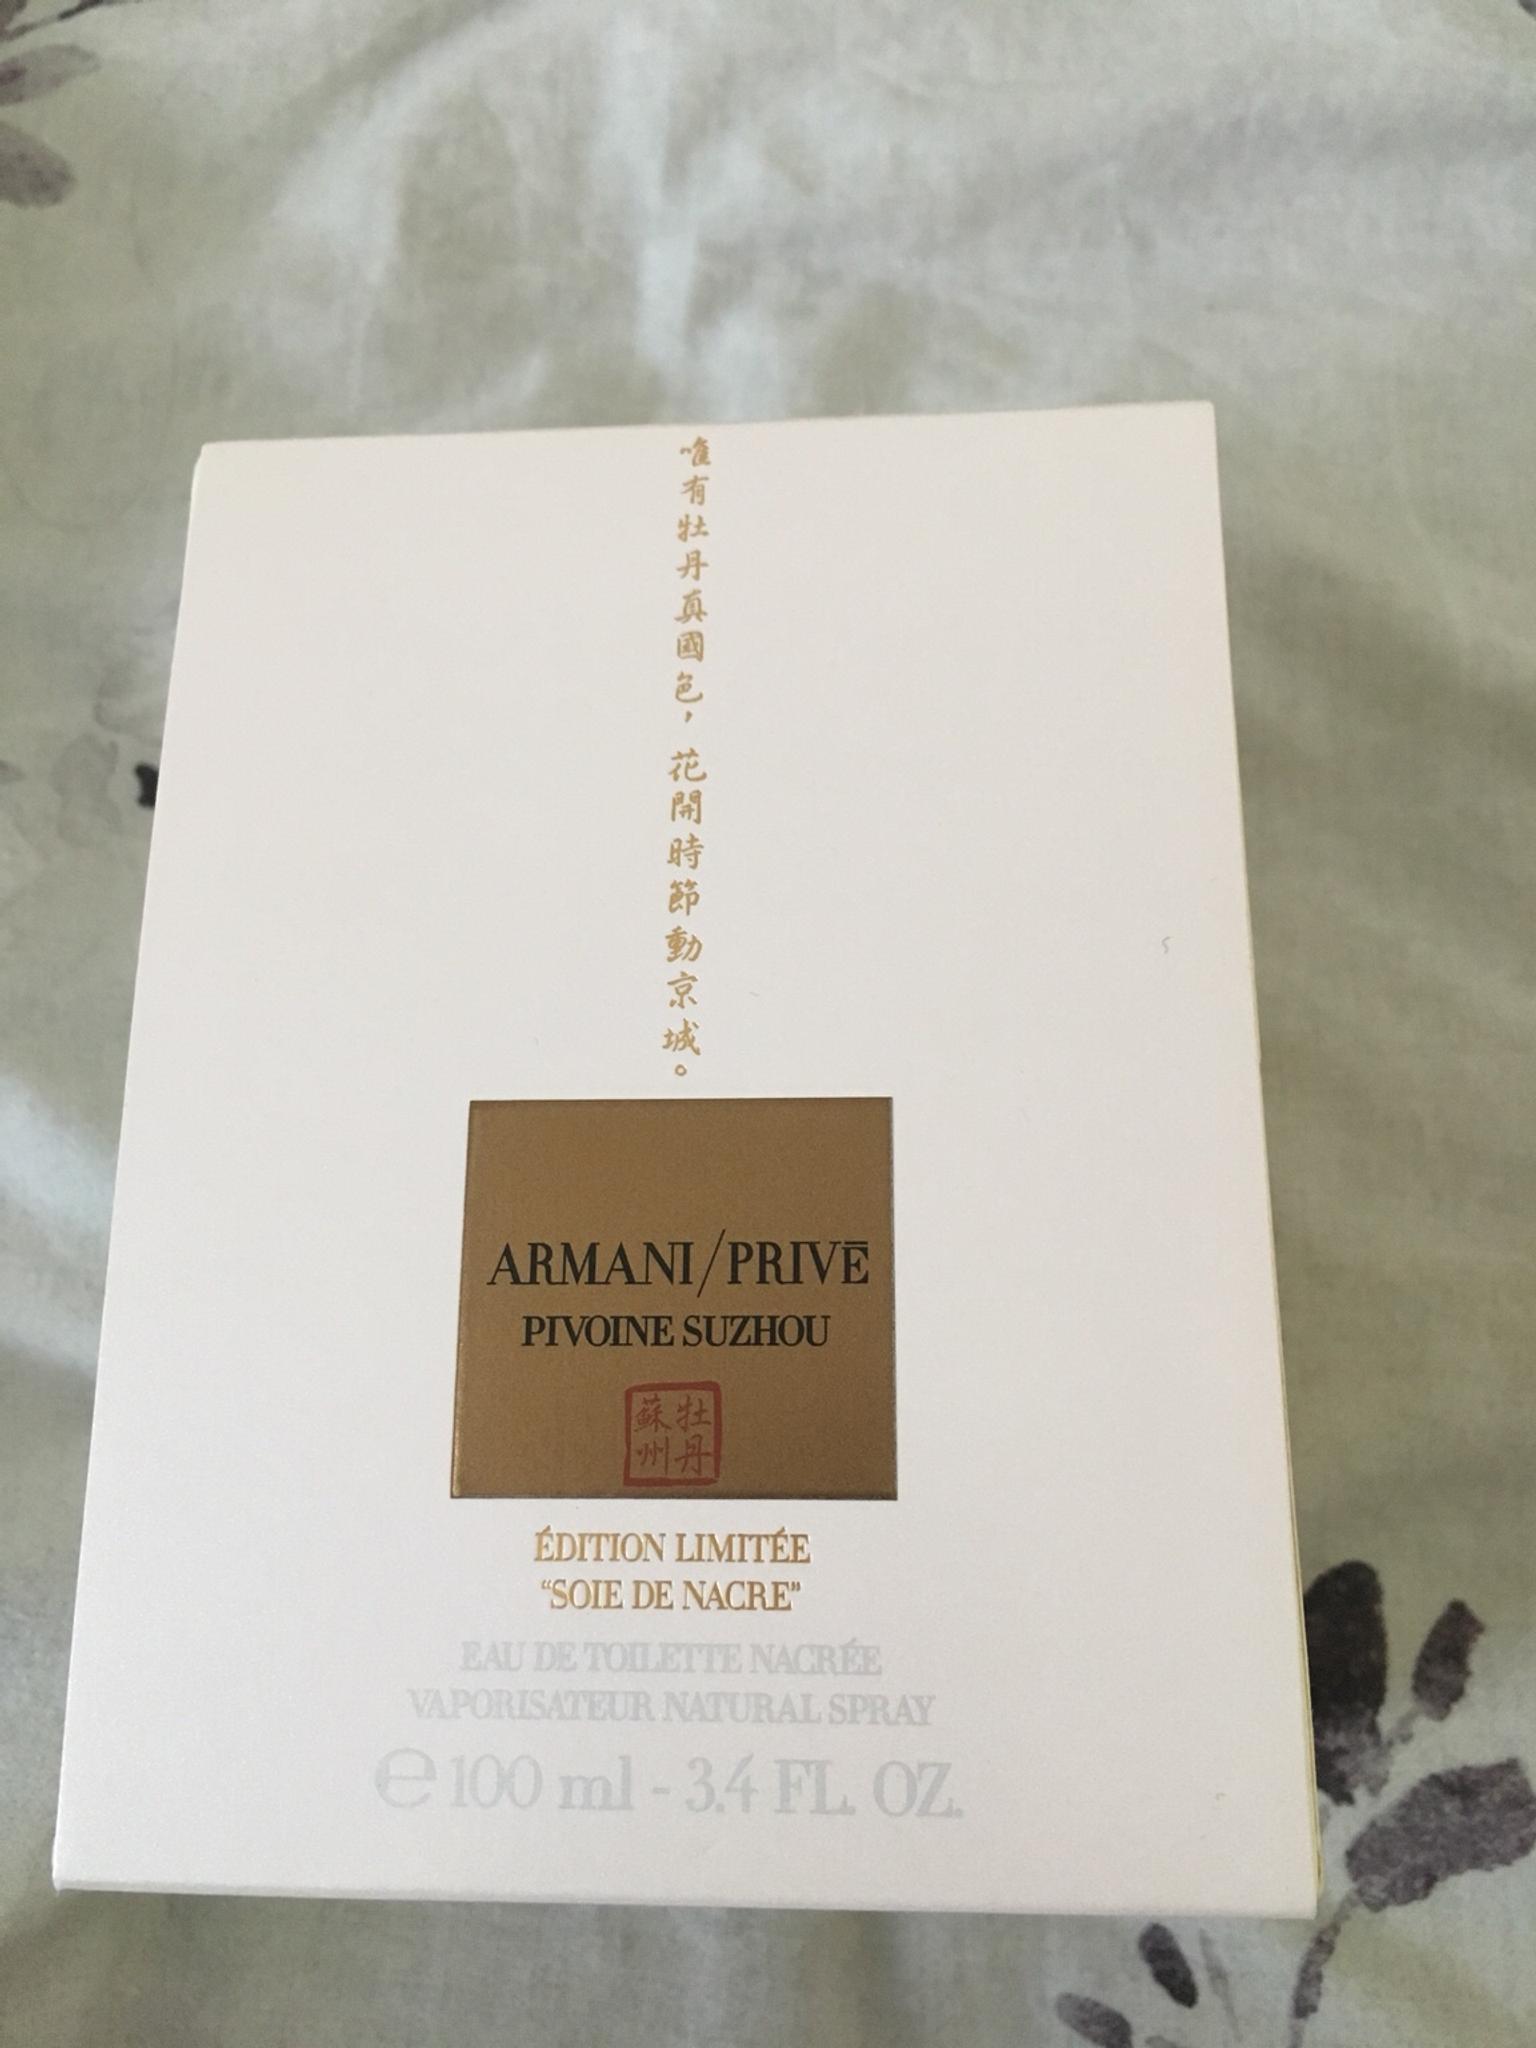 pivoine suzhou limited edition